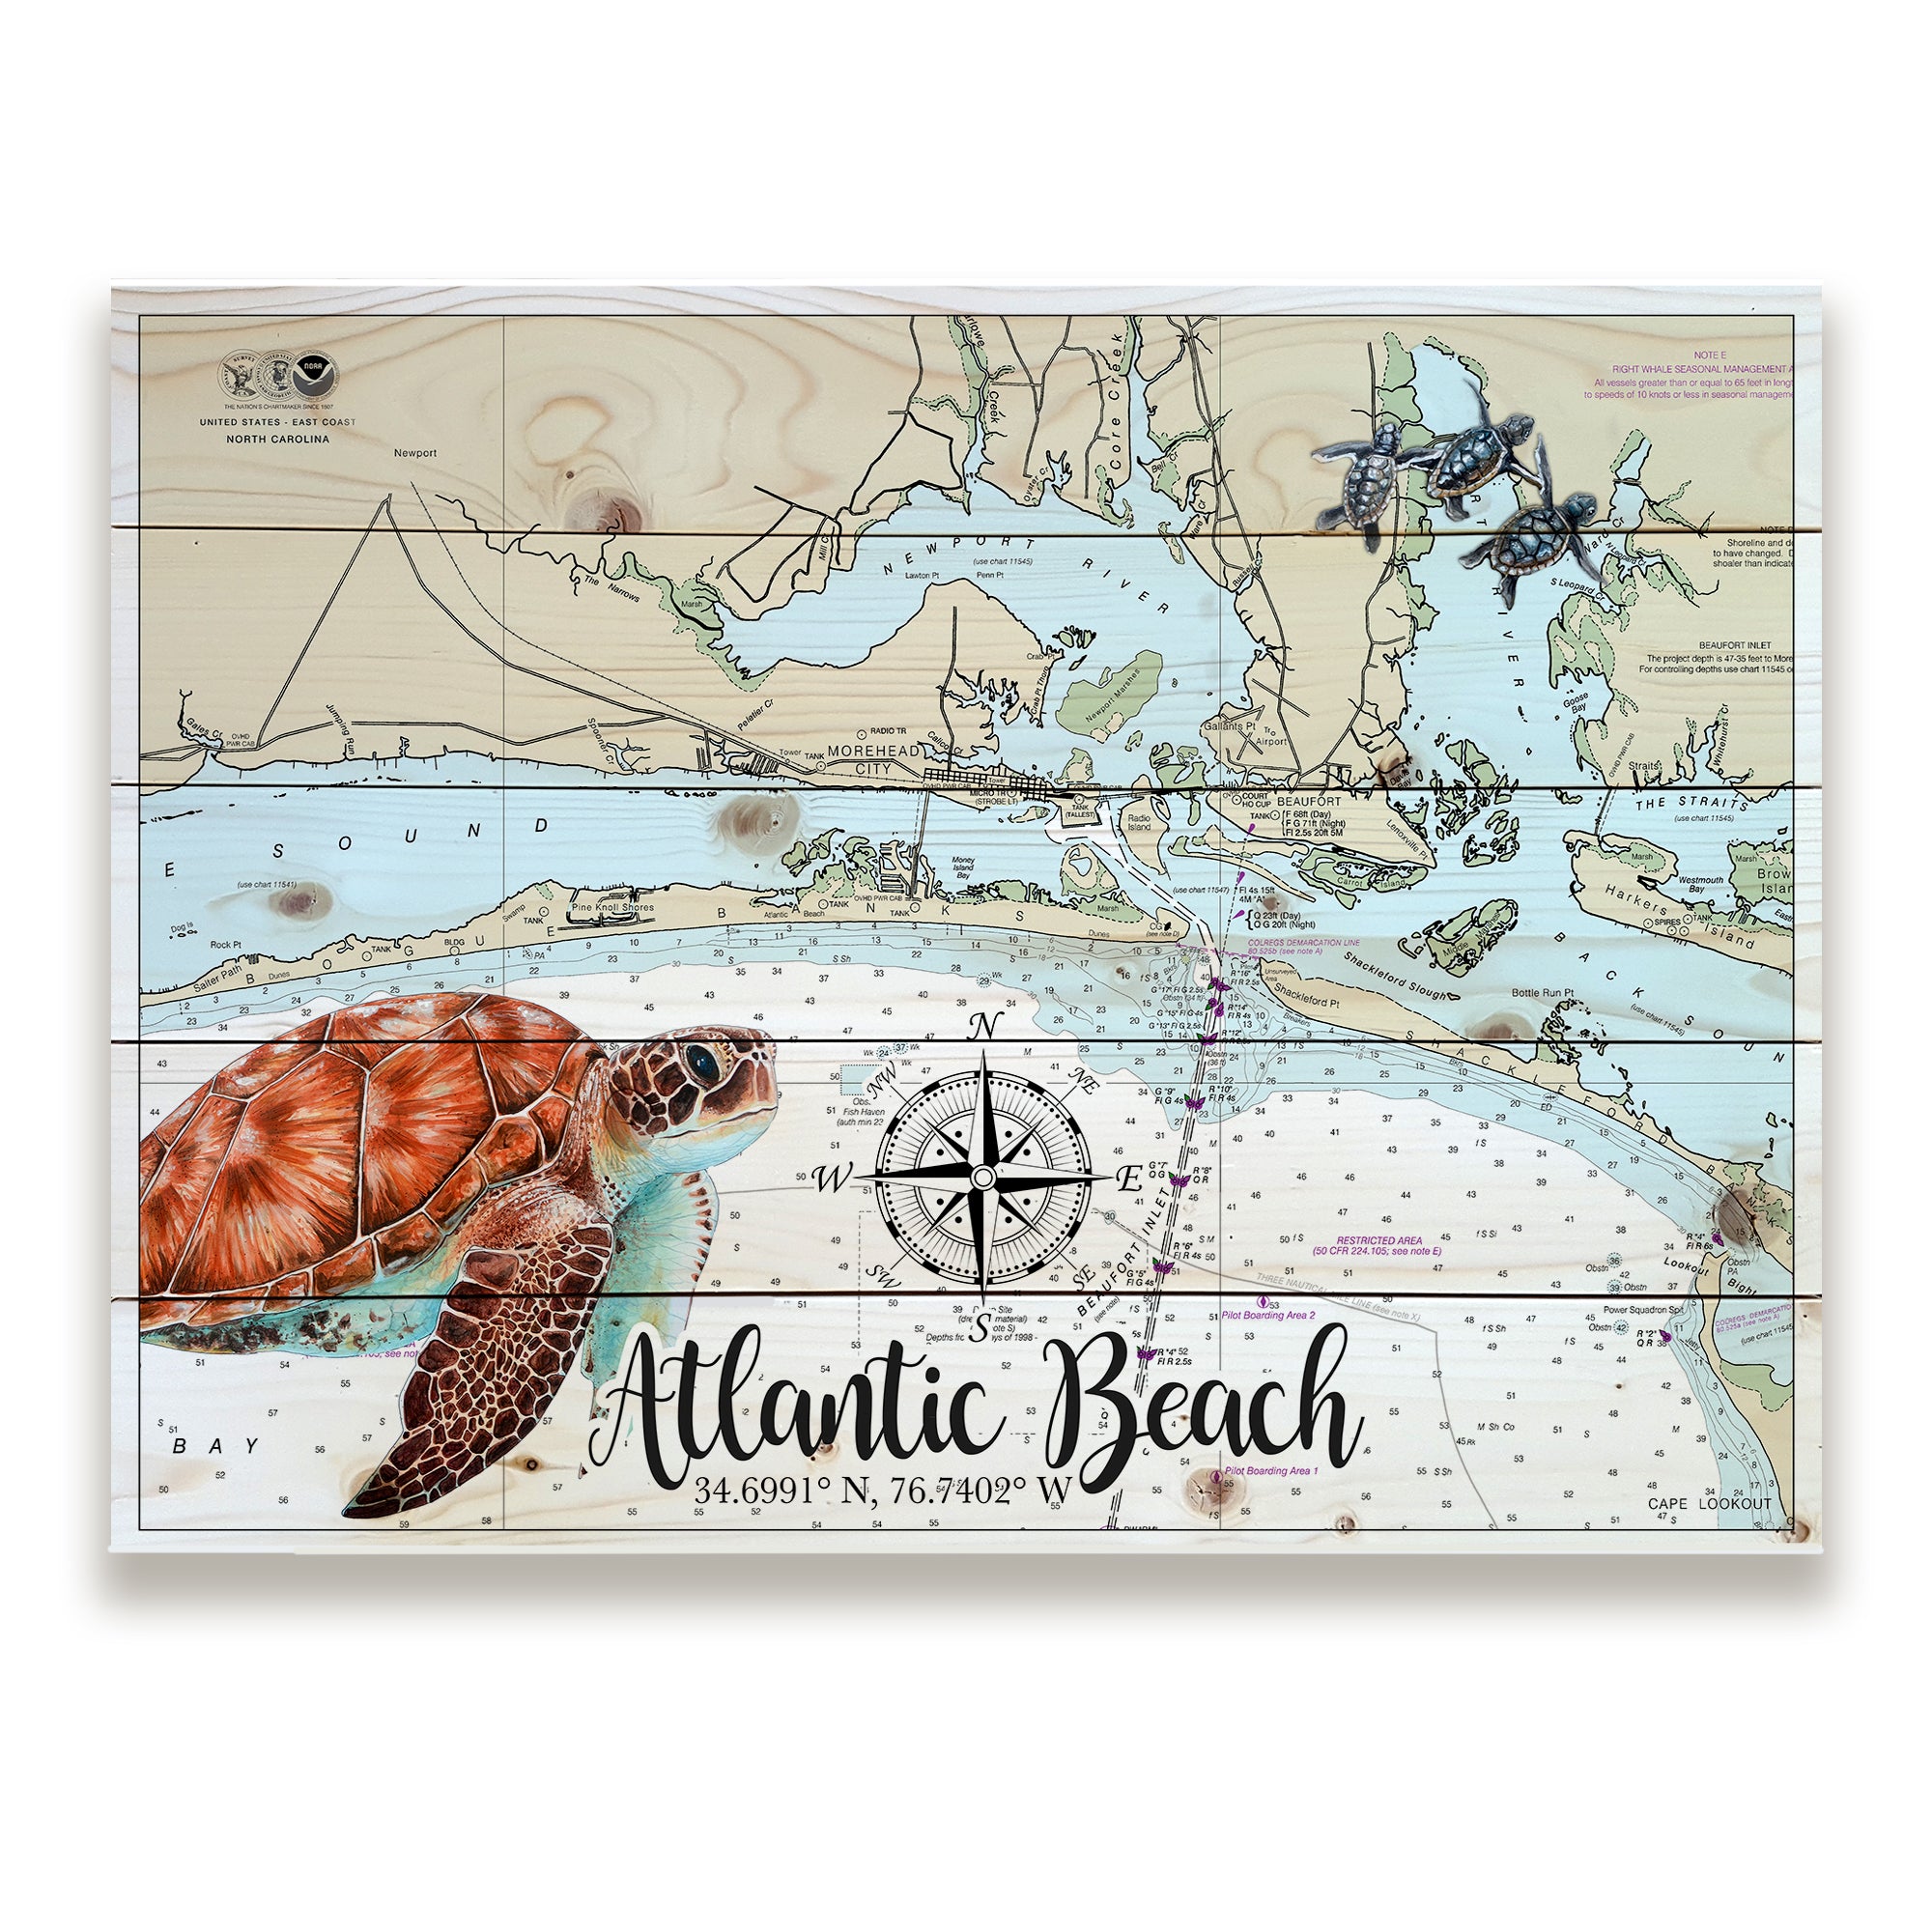 Atlantic Beach, NC - Sea Turtles Pallet Map